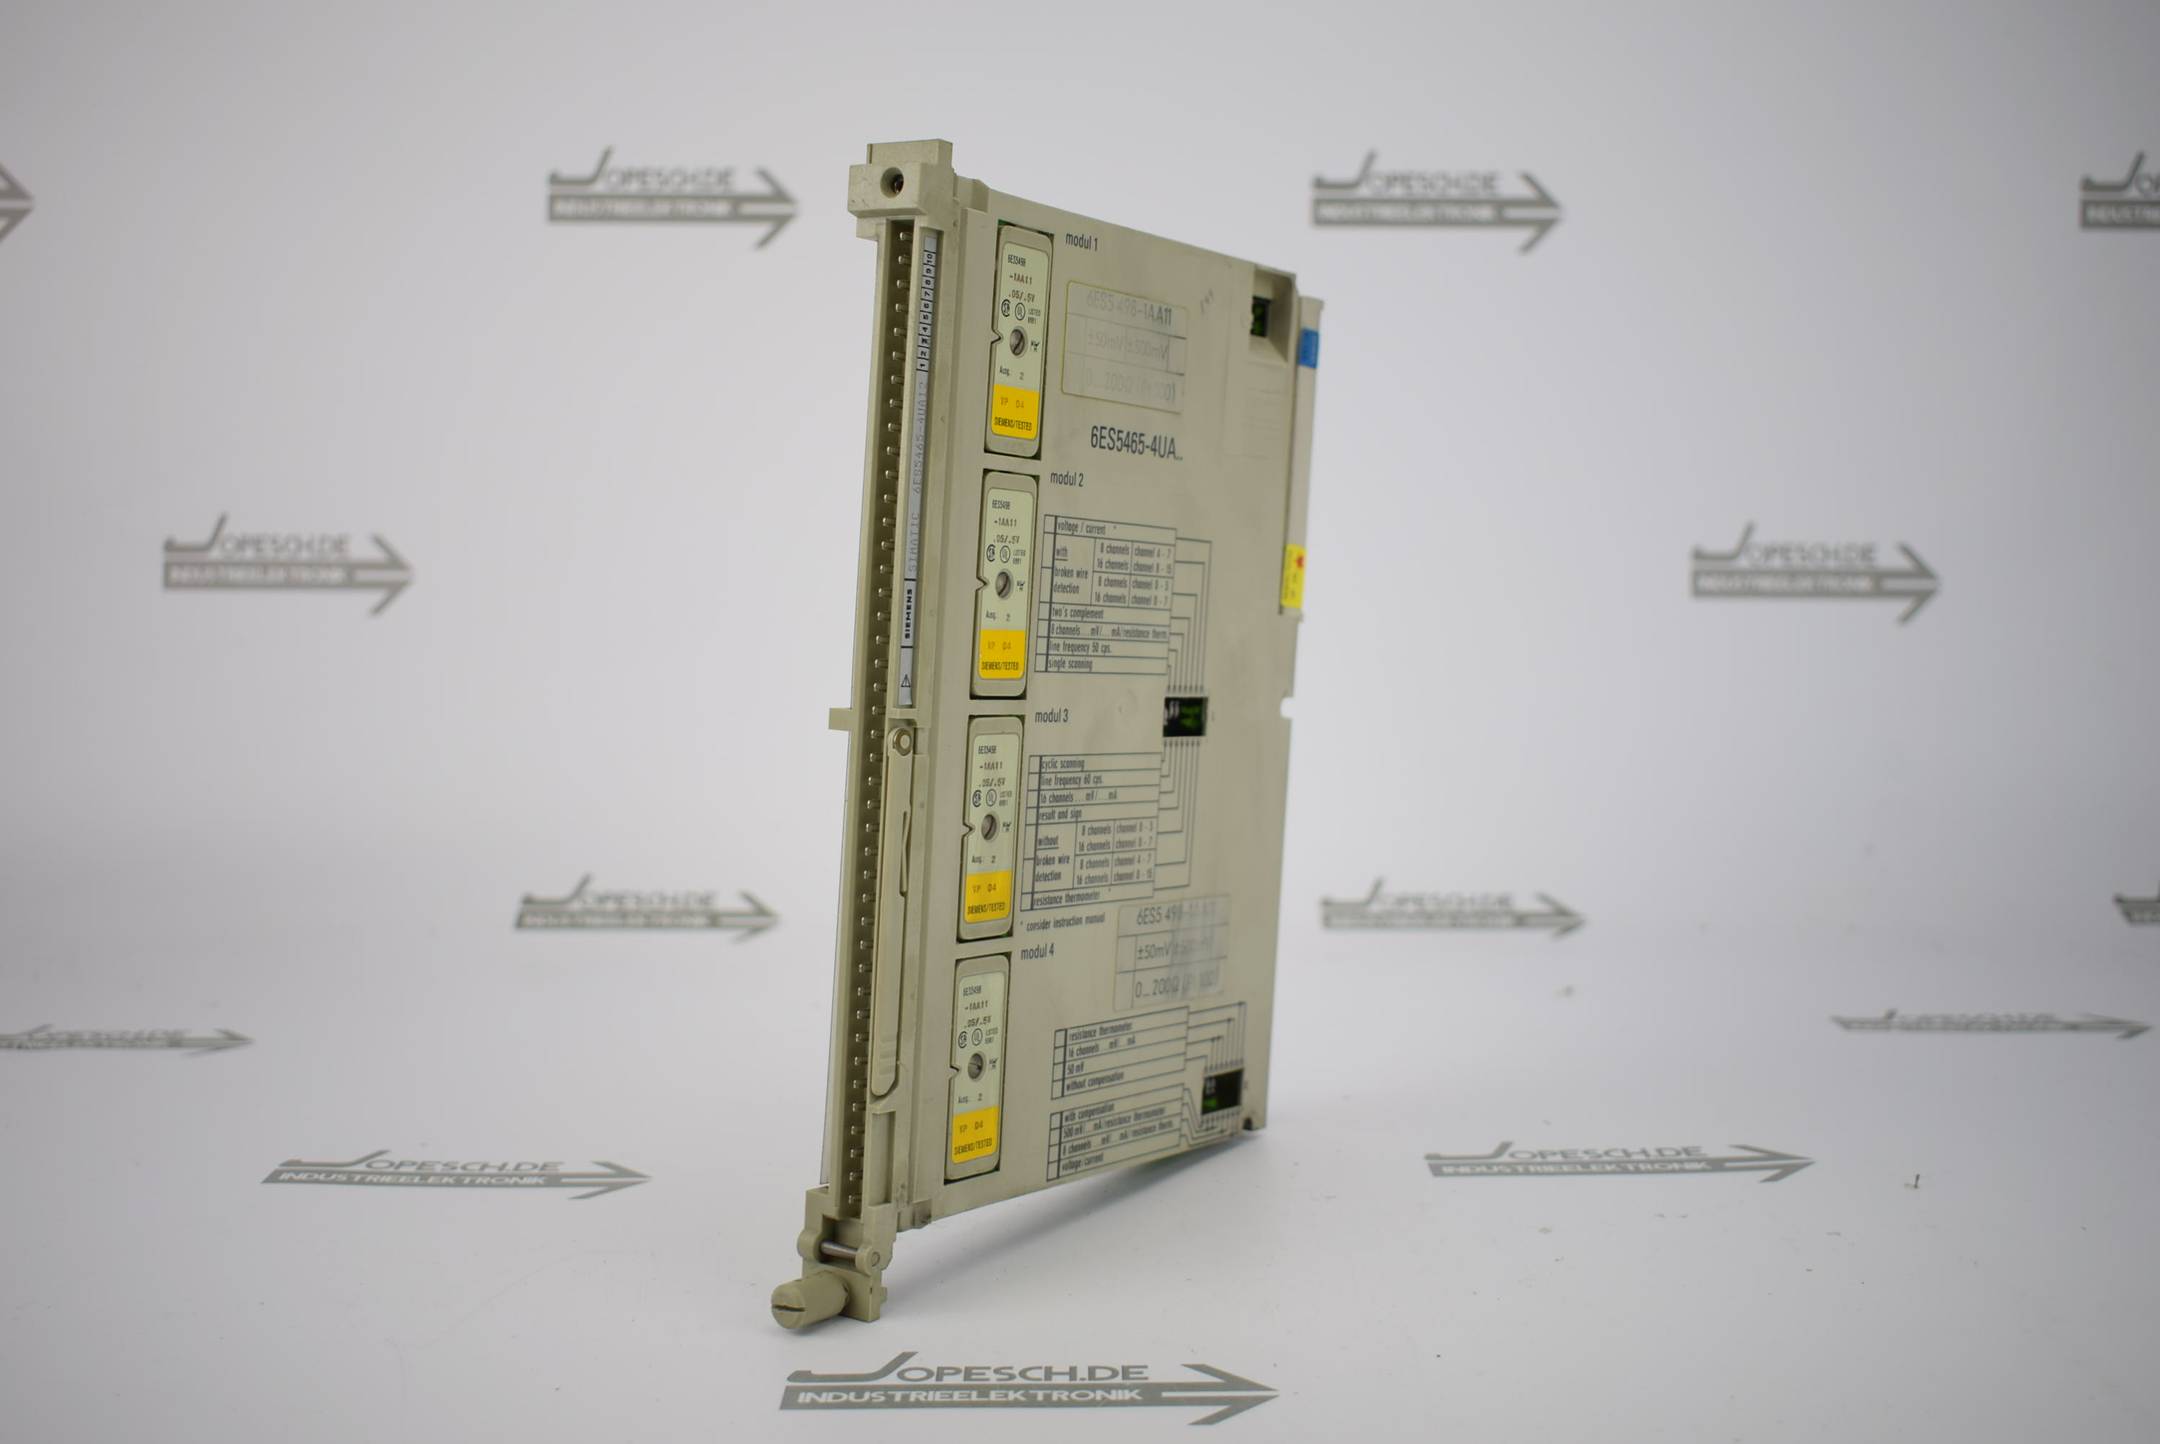 Siemens simatic S5 465 Analog input 6ES5 465-4UA12 ( 6ES5465-4UA12 )